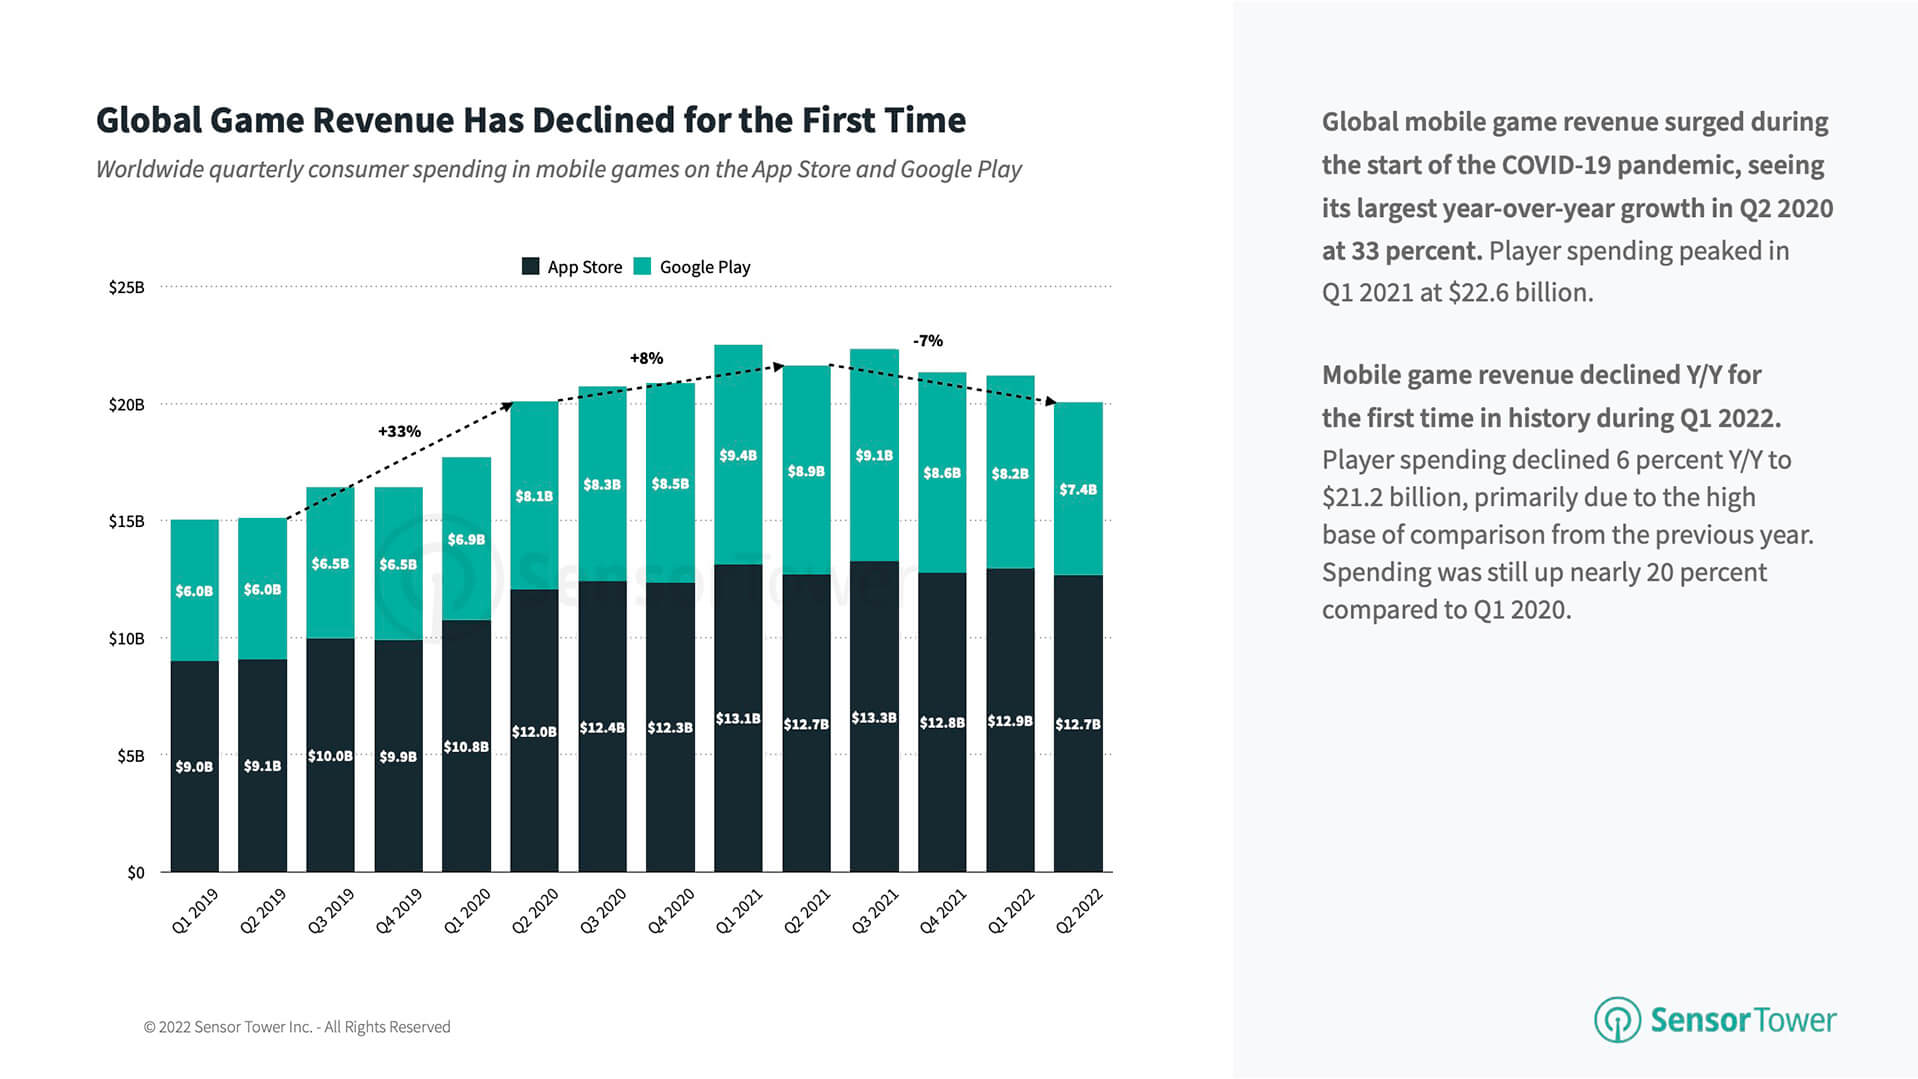 mobile-gaming-market-outlook-2022-global-game-revenue-decline